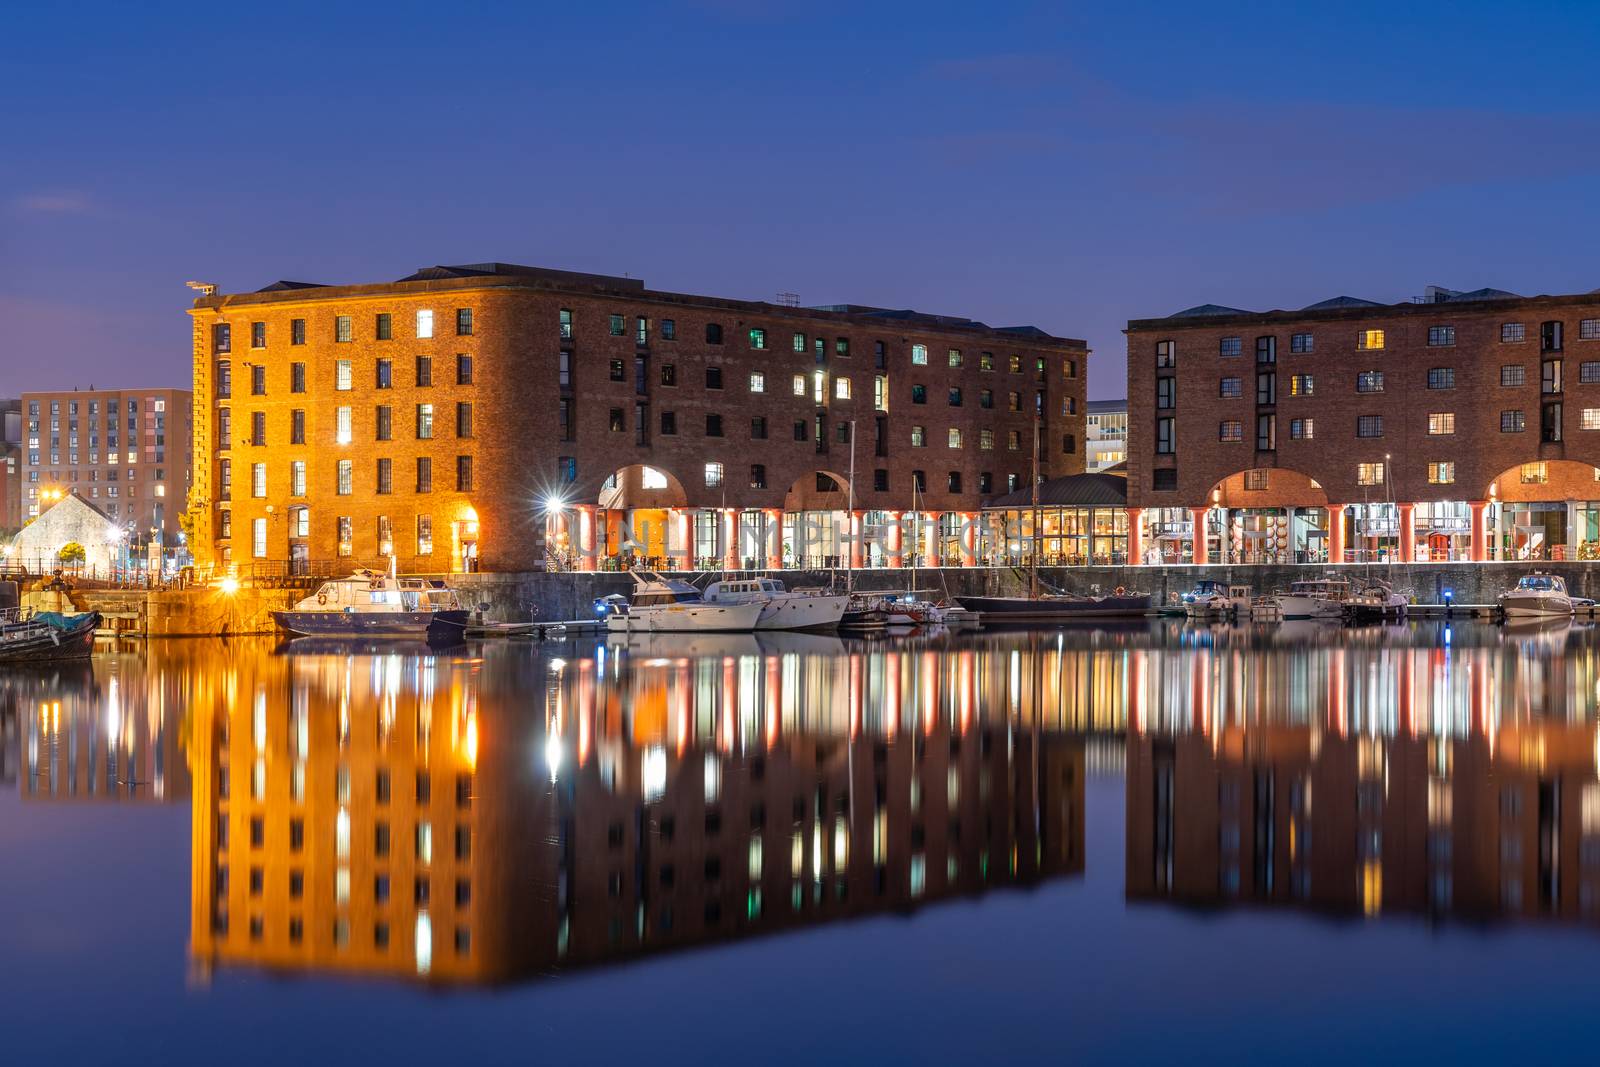 Albert Dock Liverpool England by vichie81